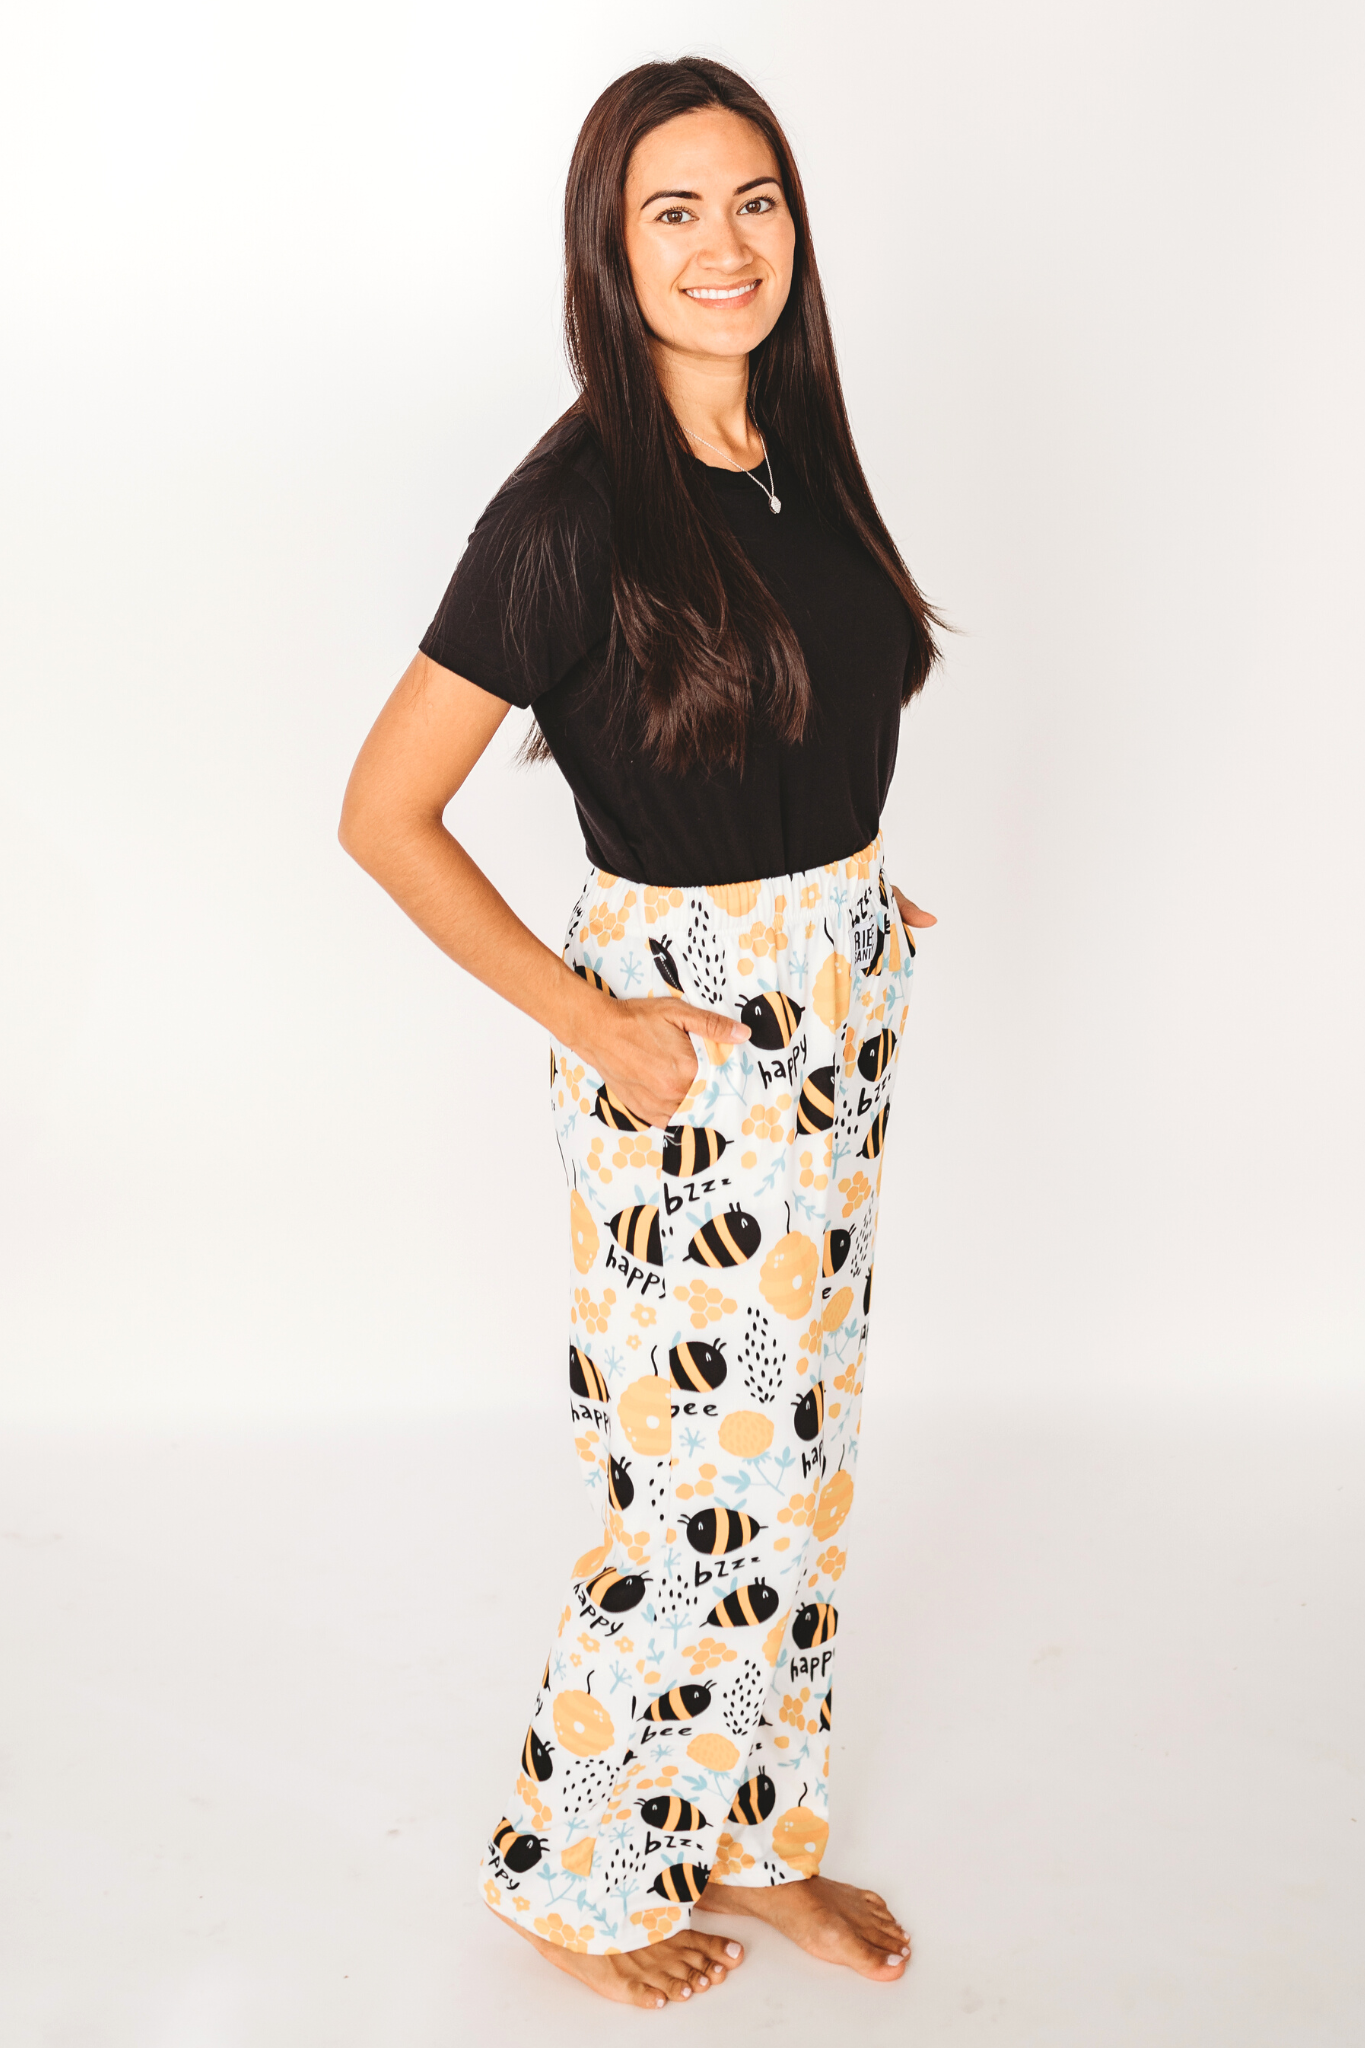 Image of model posing wearing Honey Bee pajama lounge pants side view (white background)